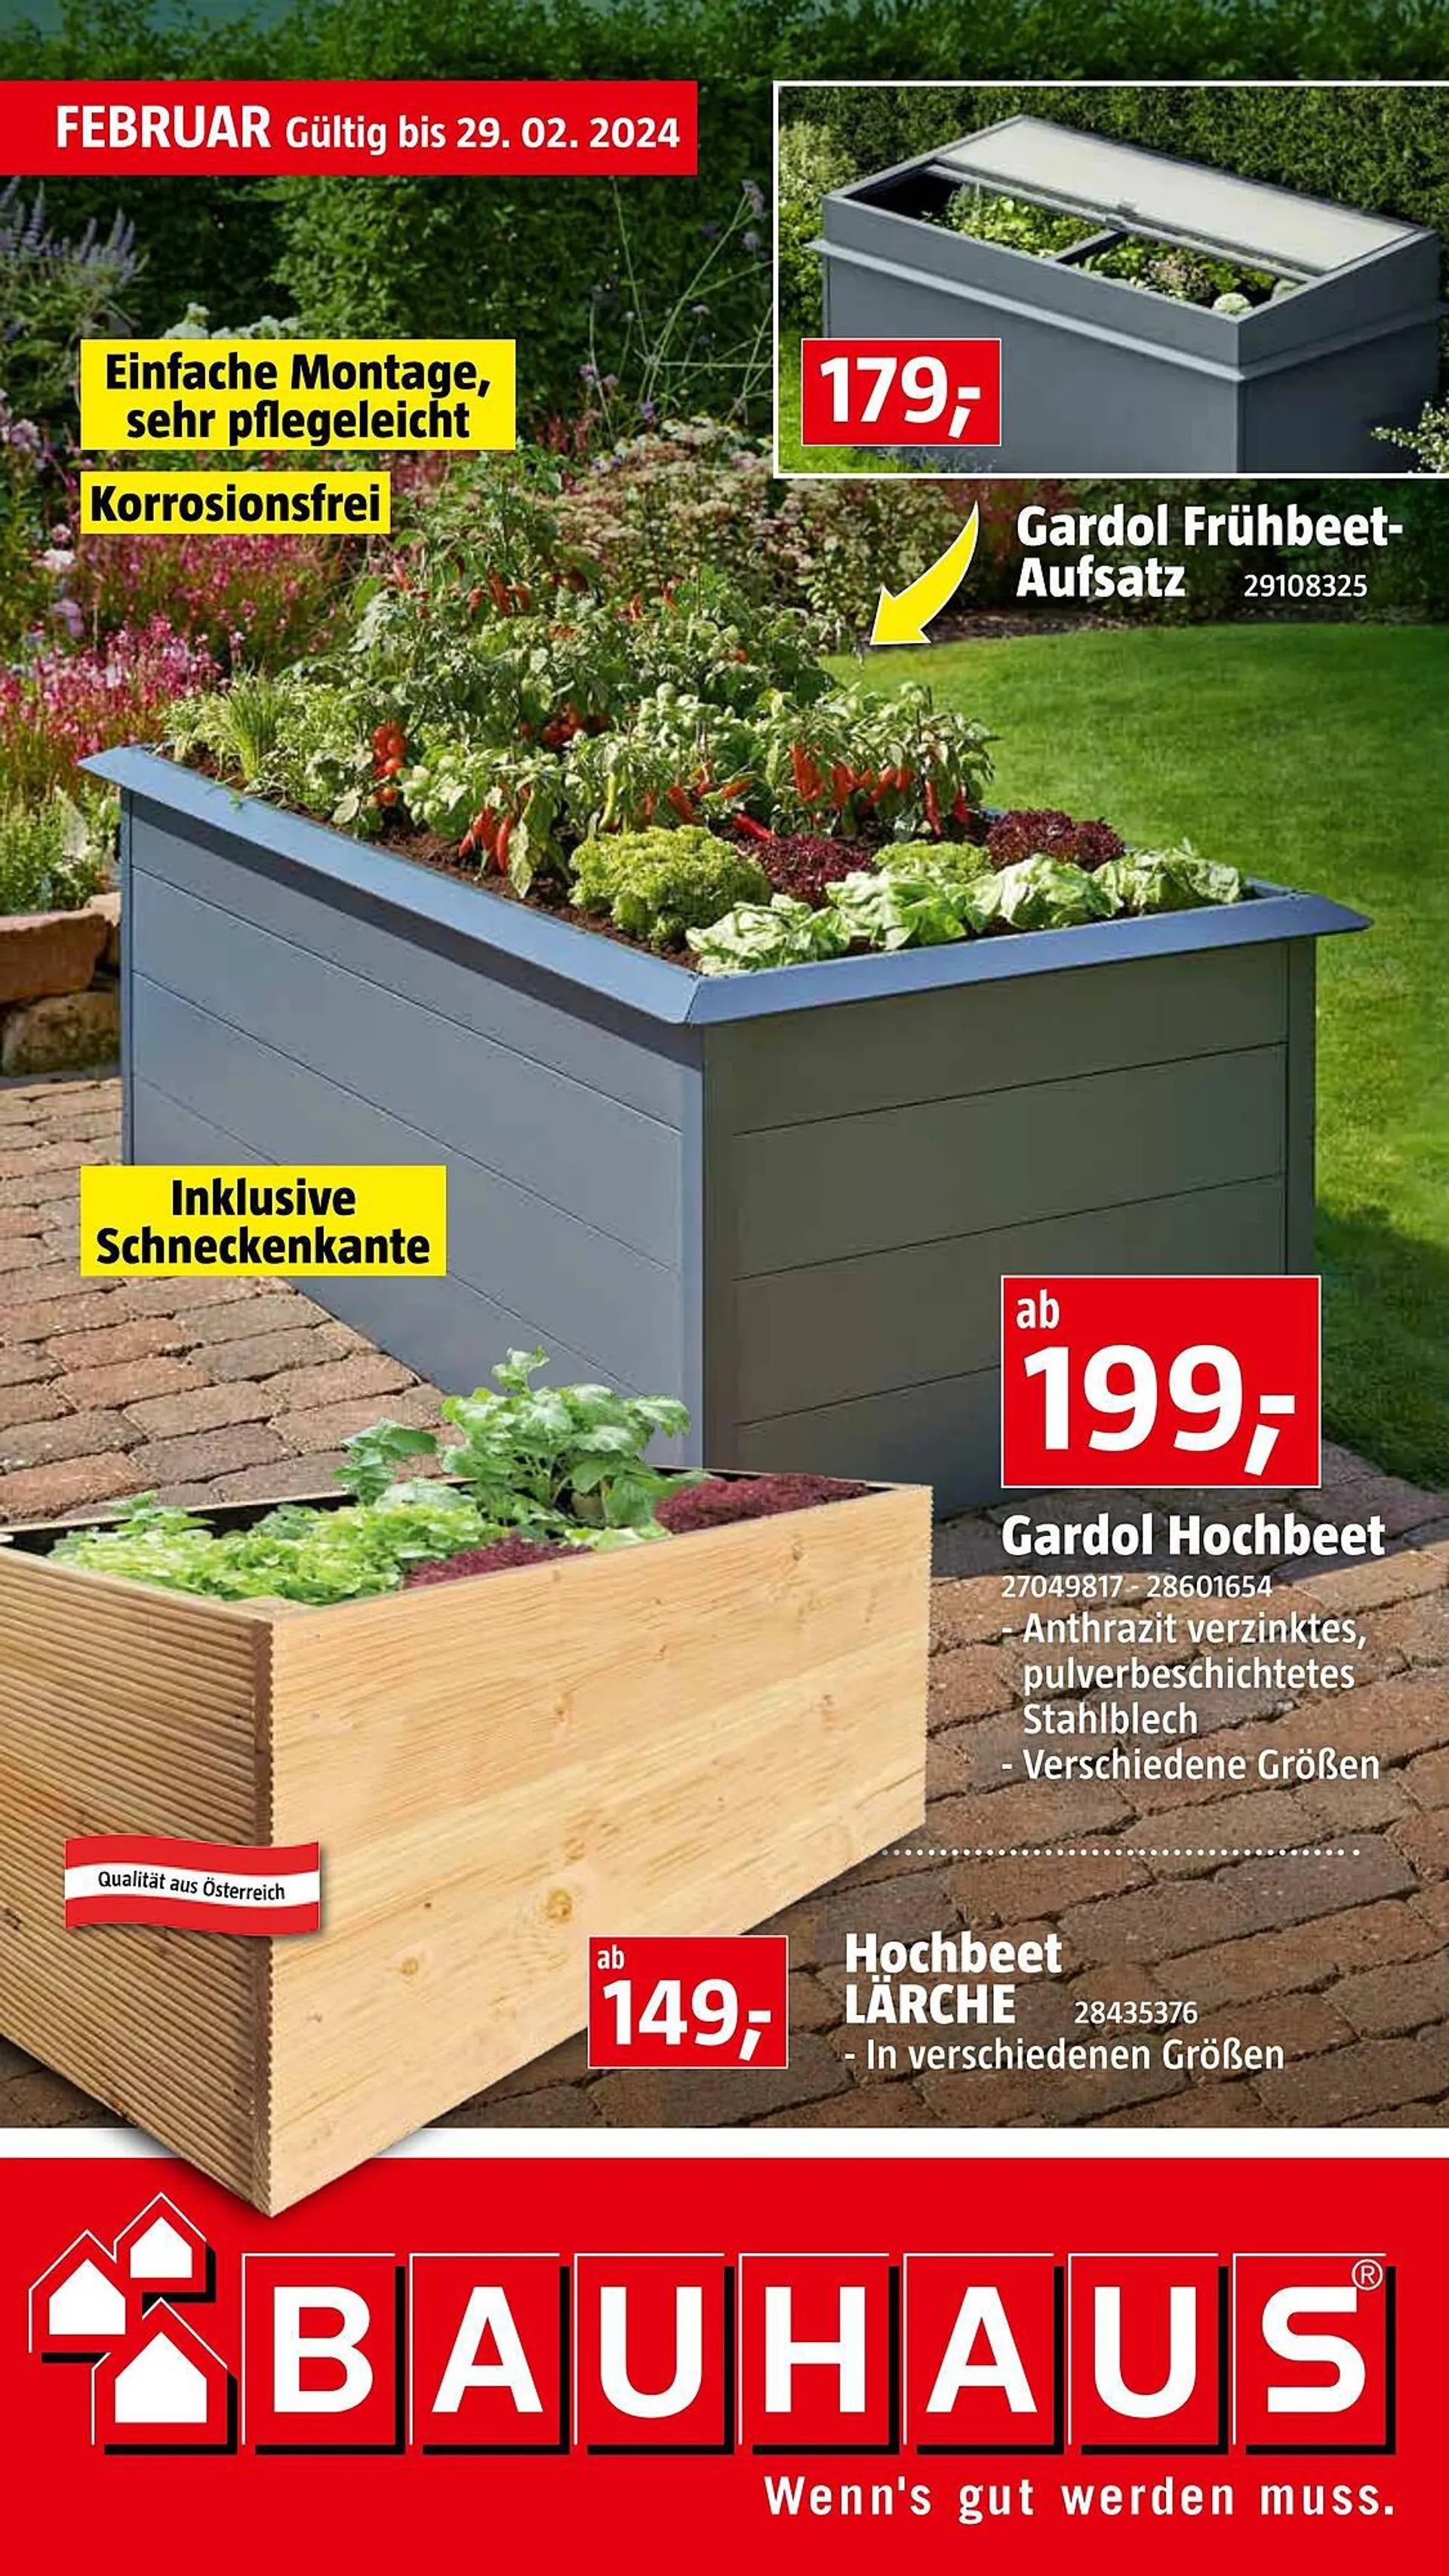 Bauhaus Flugblatt von 31. Jänner bis 29. Februar 2024 - Flugblätt seite  